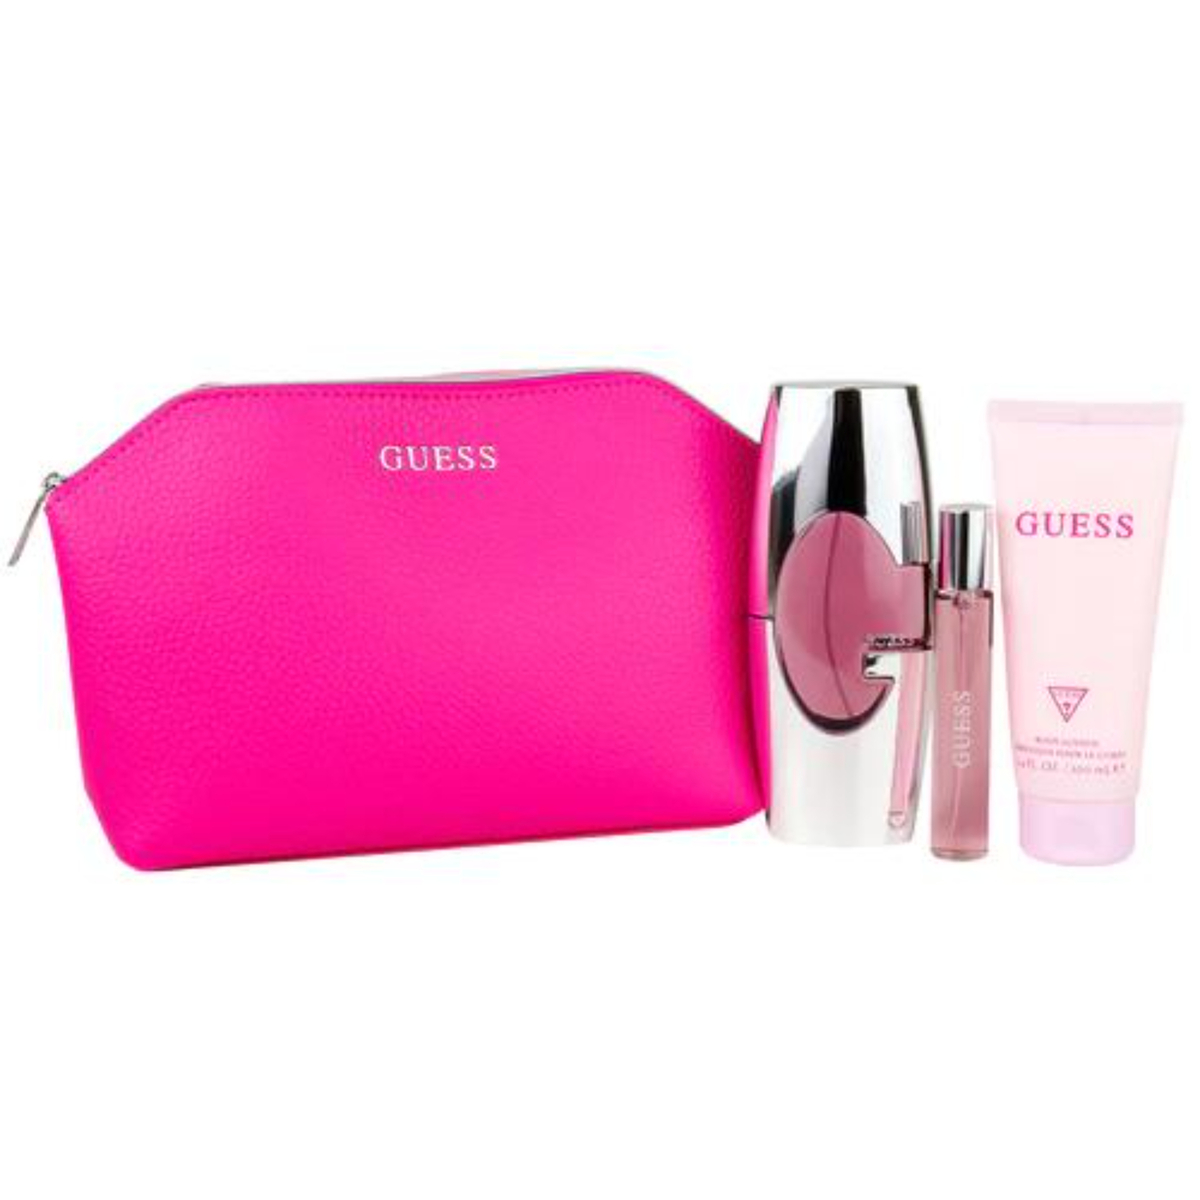 Guess Pink Set For Women, 75 ml Eau de Parfum, 15 ml TRAVEL Spray, 100 ml Body LotionWith Pouch